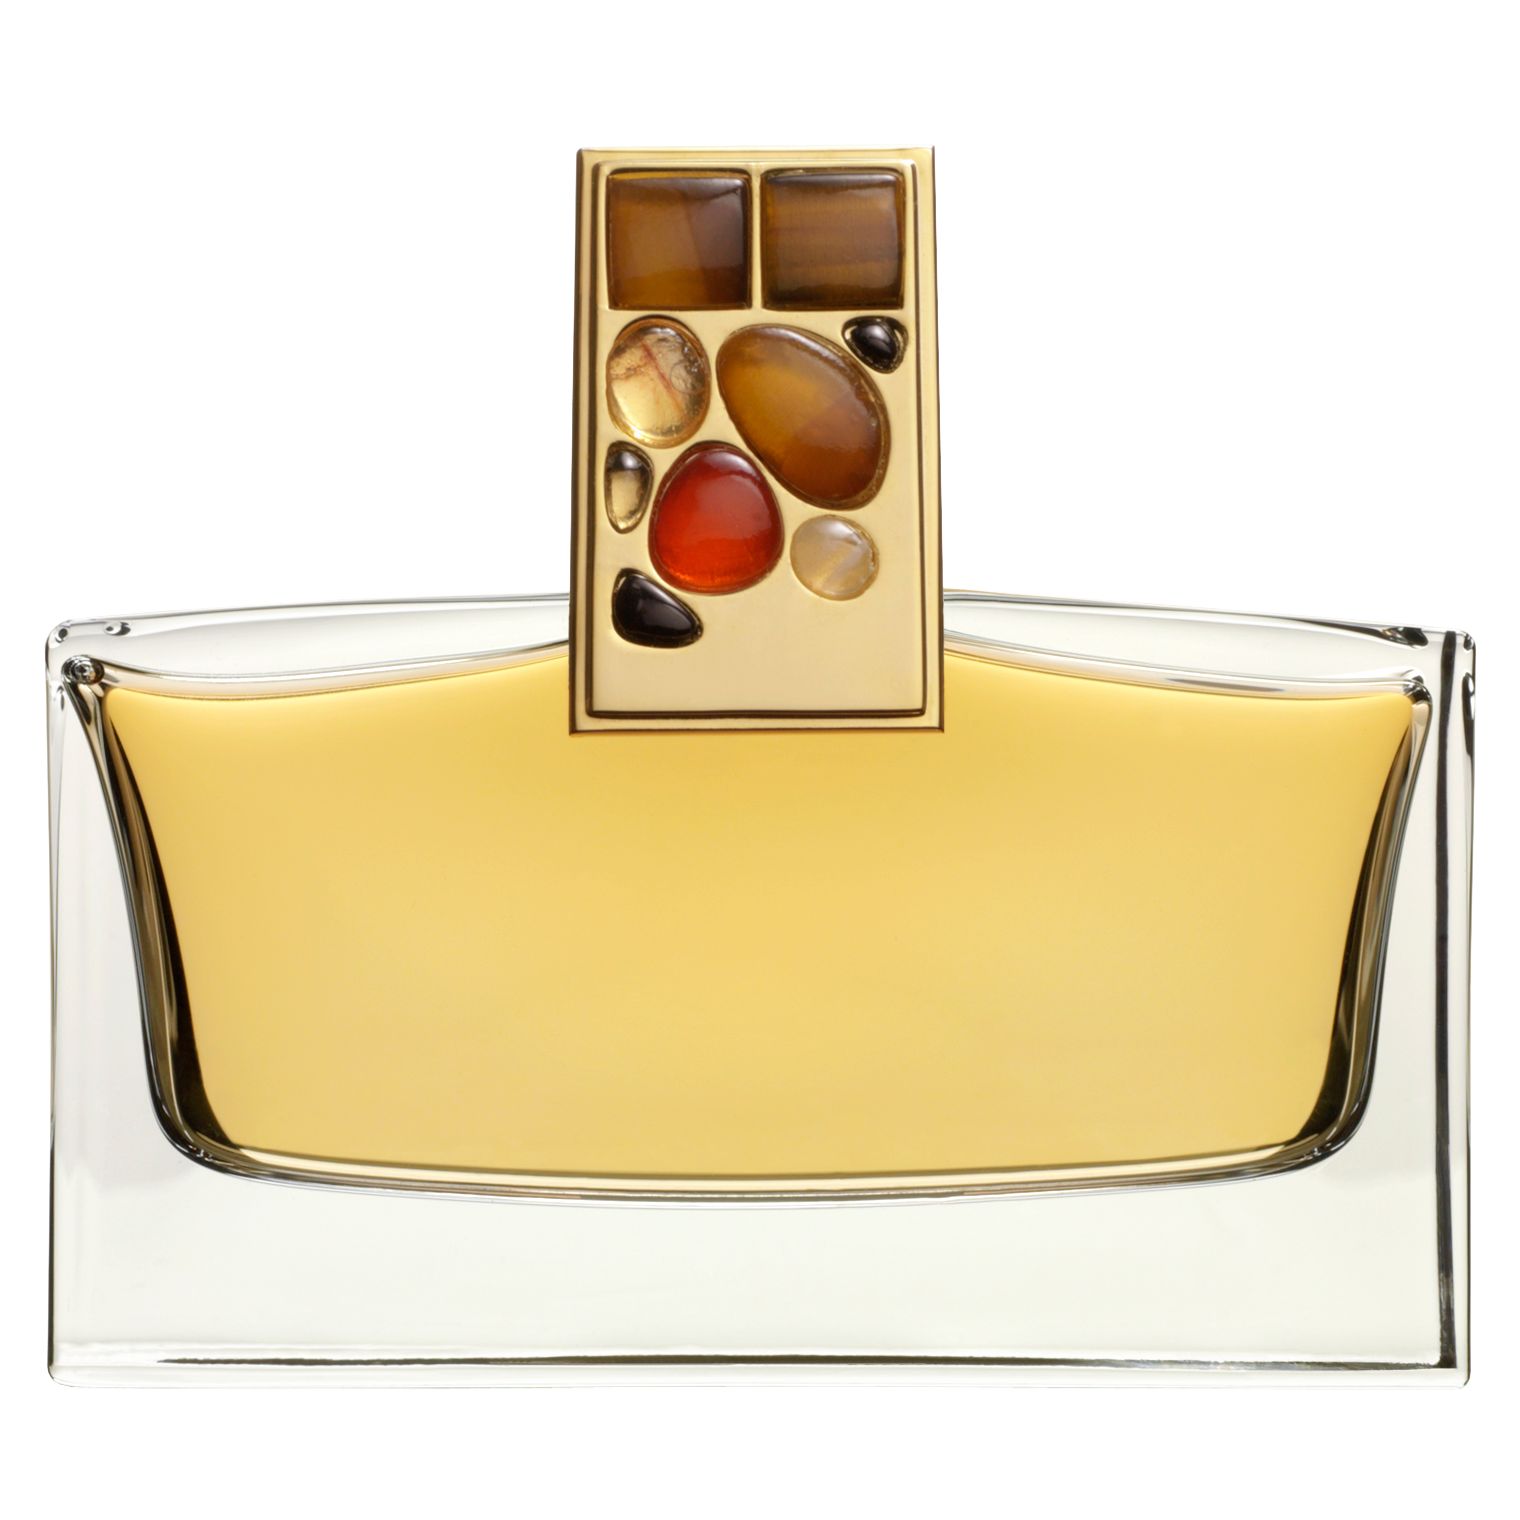 Estée Lauder Private Collection Amber Ylang Ylang Parfum, 30ml at John Lewis